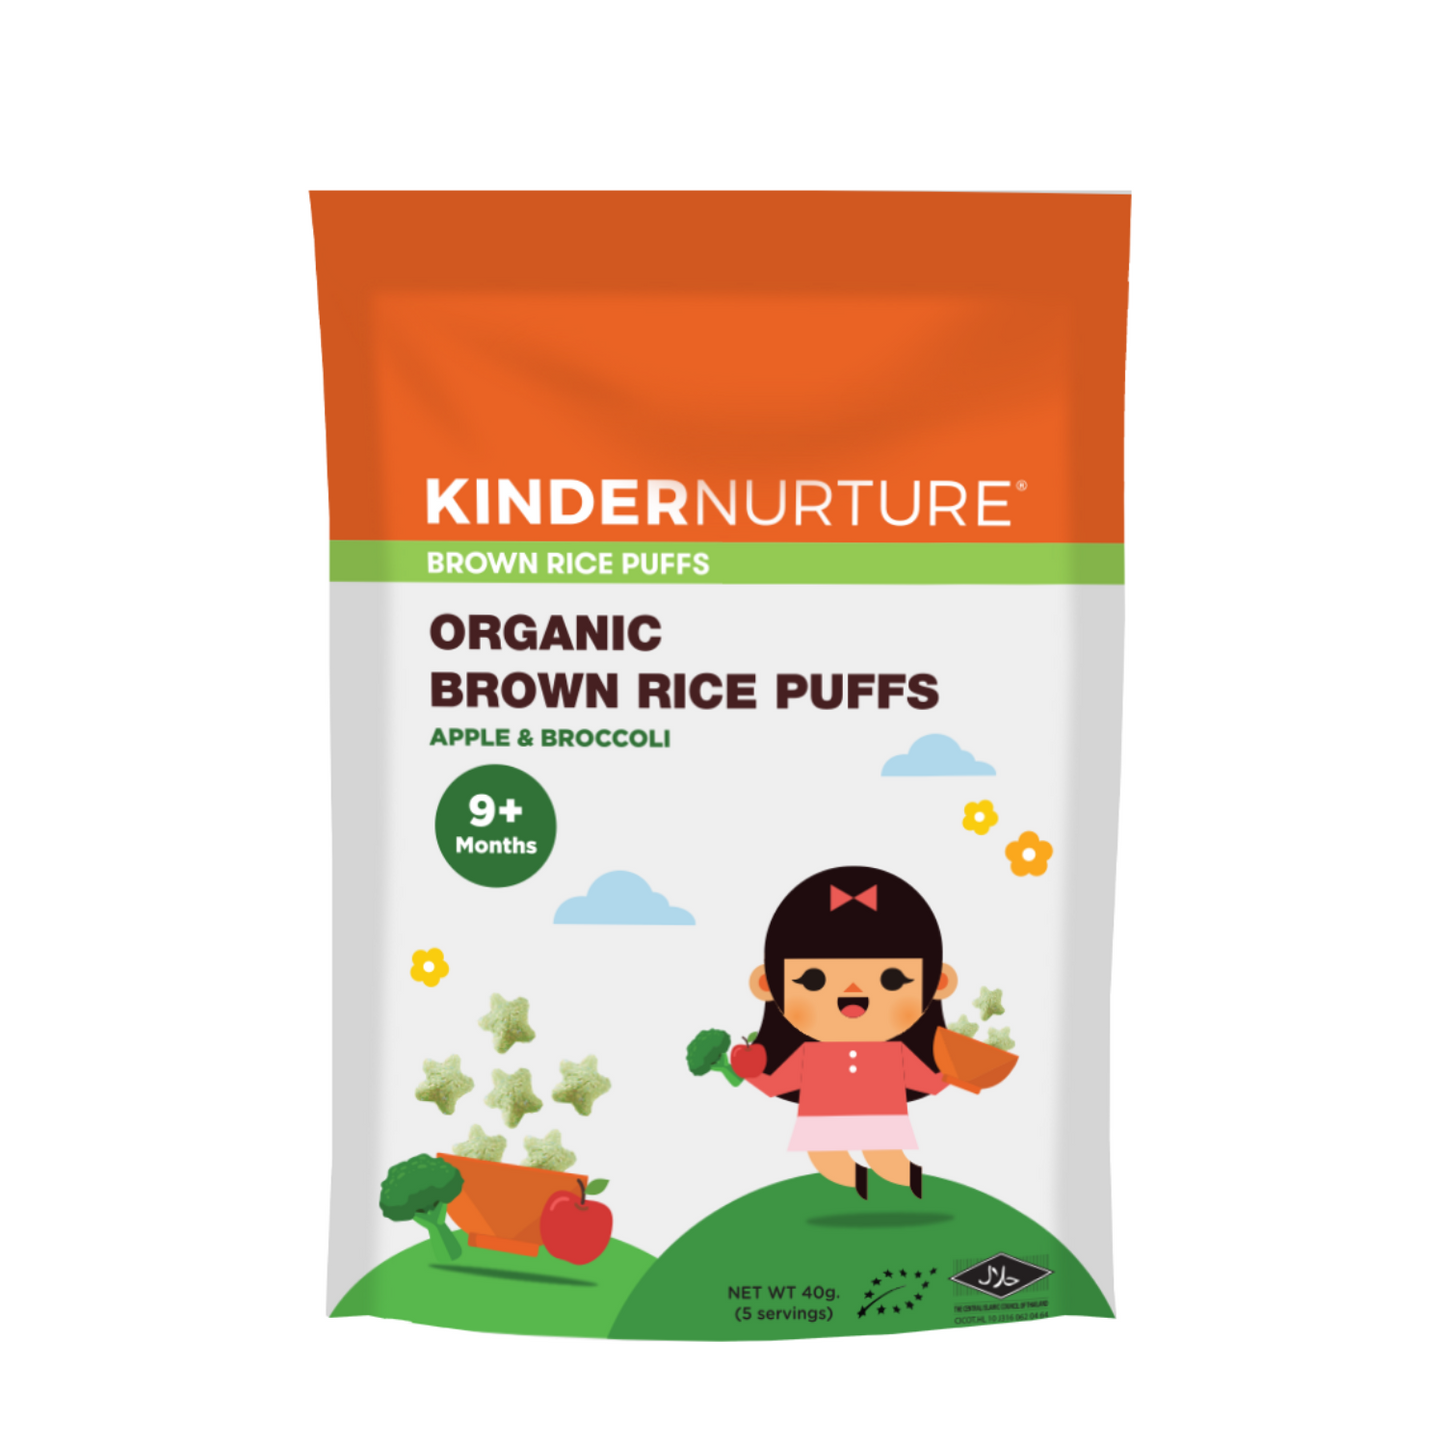 KinderNurture Organic Brown Rice Puffs - Apple & Broccoli, 40g.